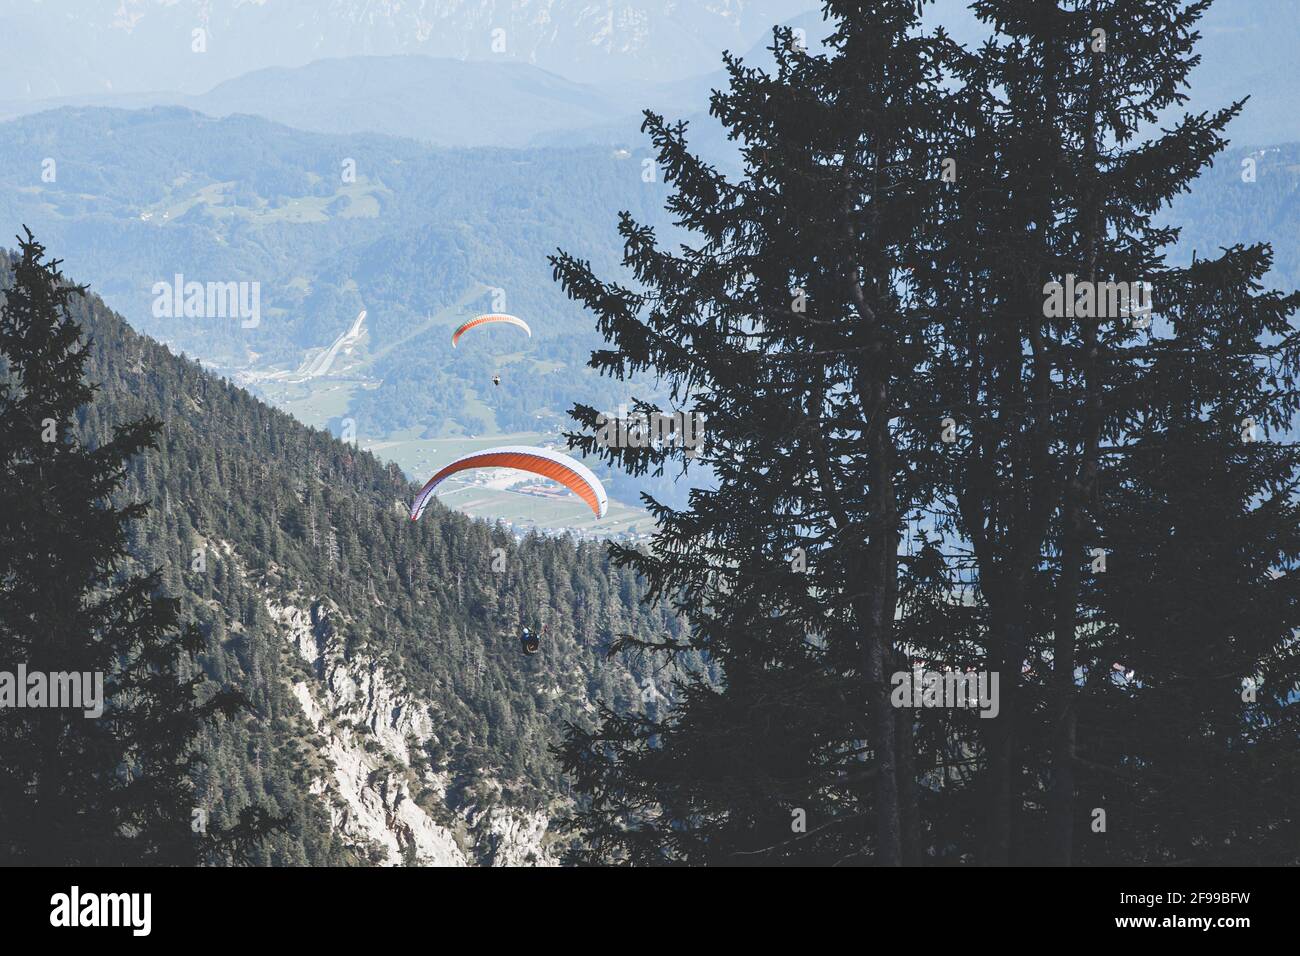 Two paragliders over Garmisch-Partenkirchen, the ski jump in the background Stock Photo